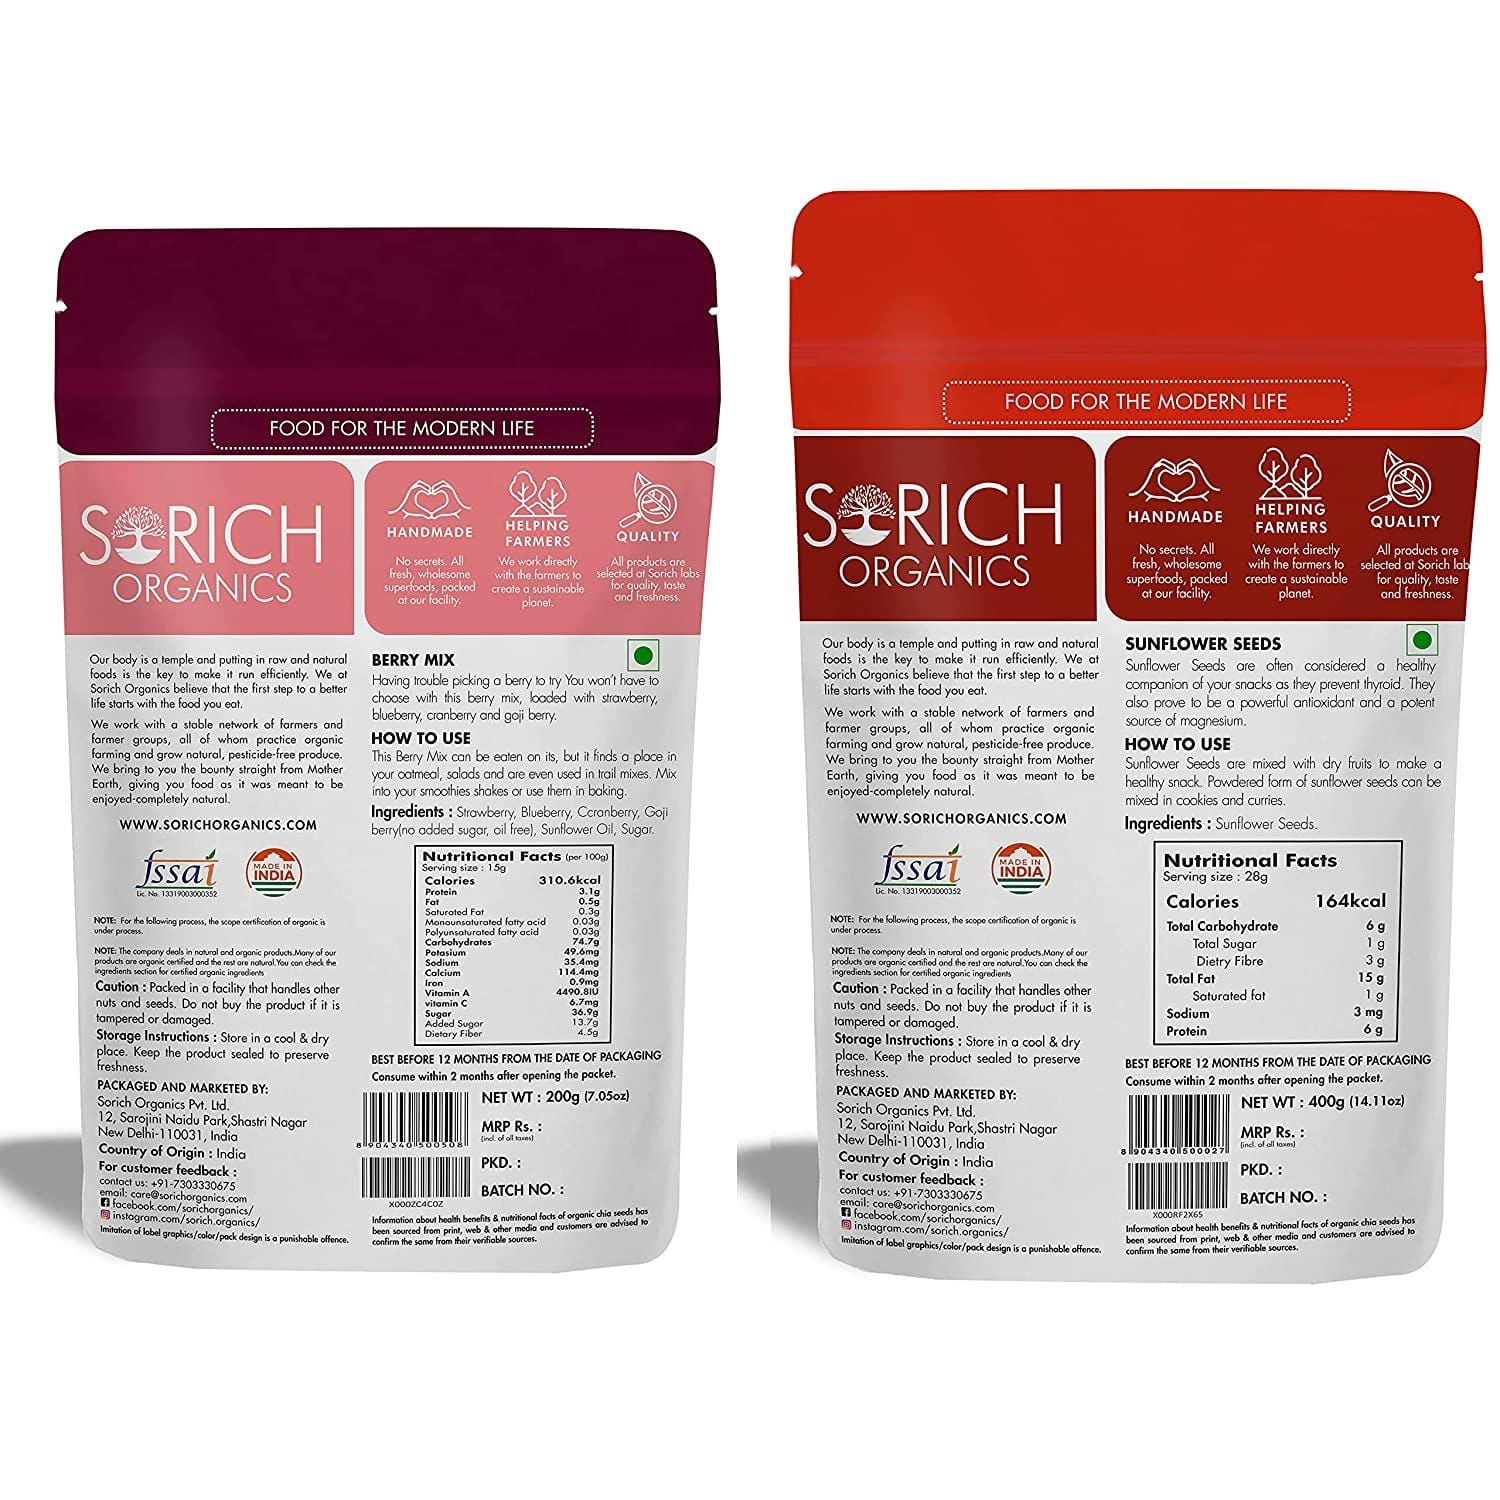 Combo Berries Mix 200 Gm and Sunflower Seed 400 Gm- 600 Gm - Sorichorganics